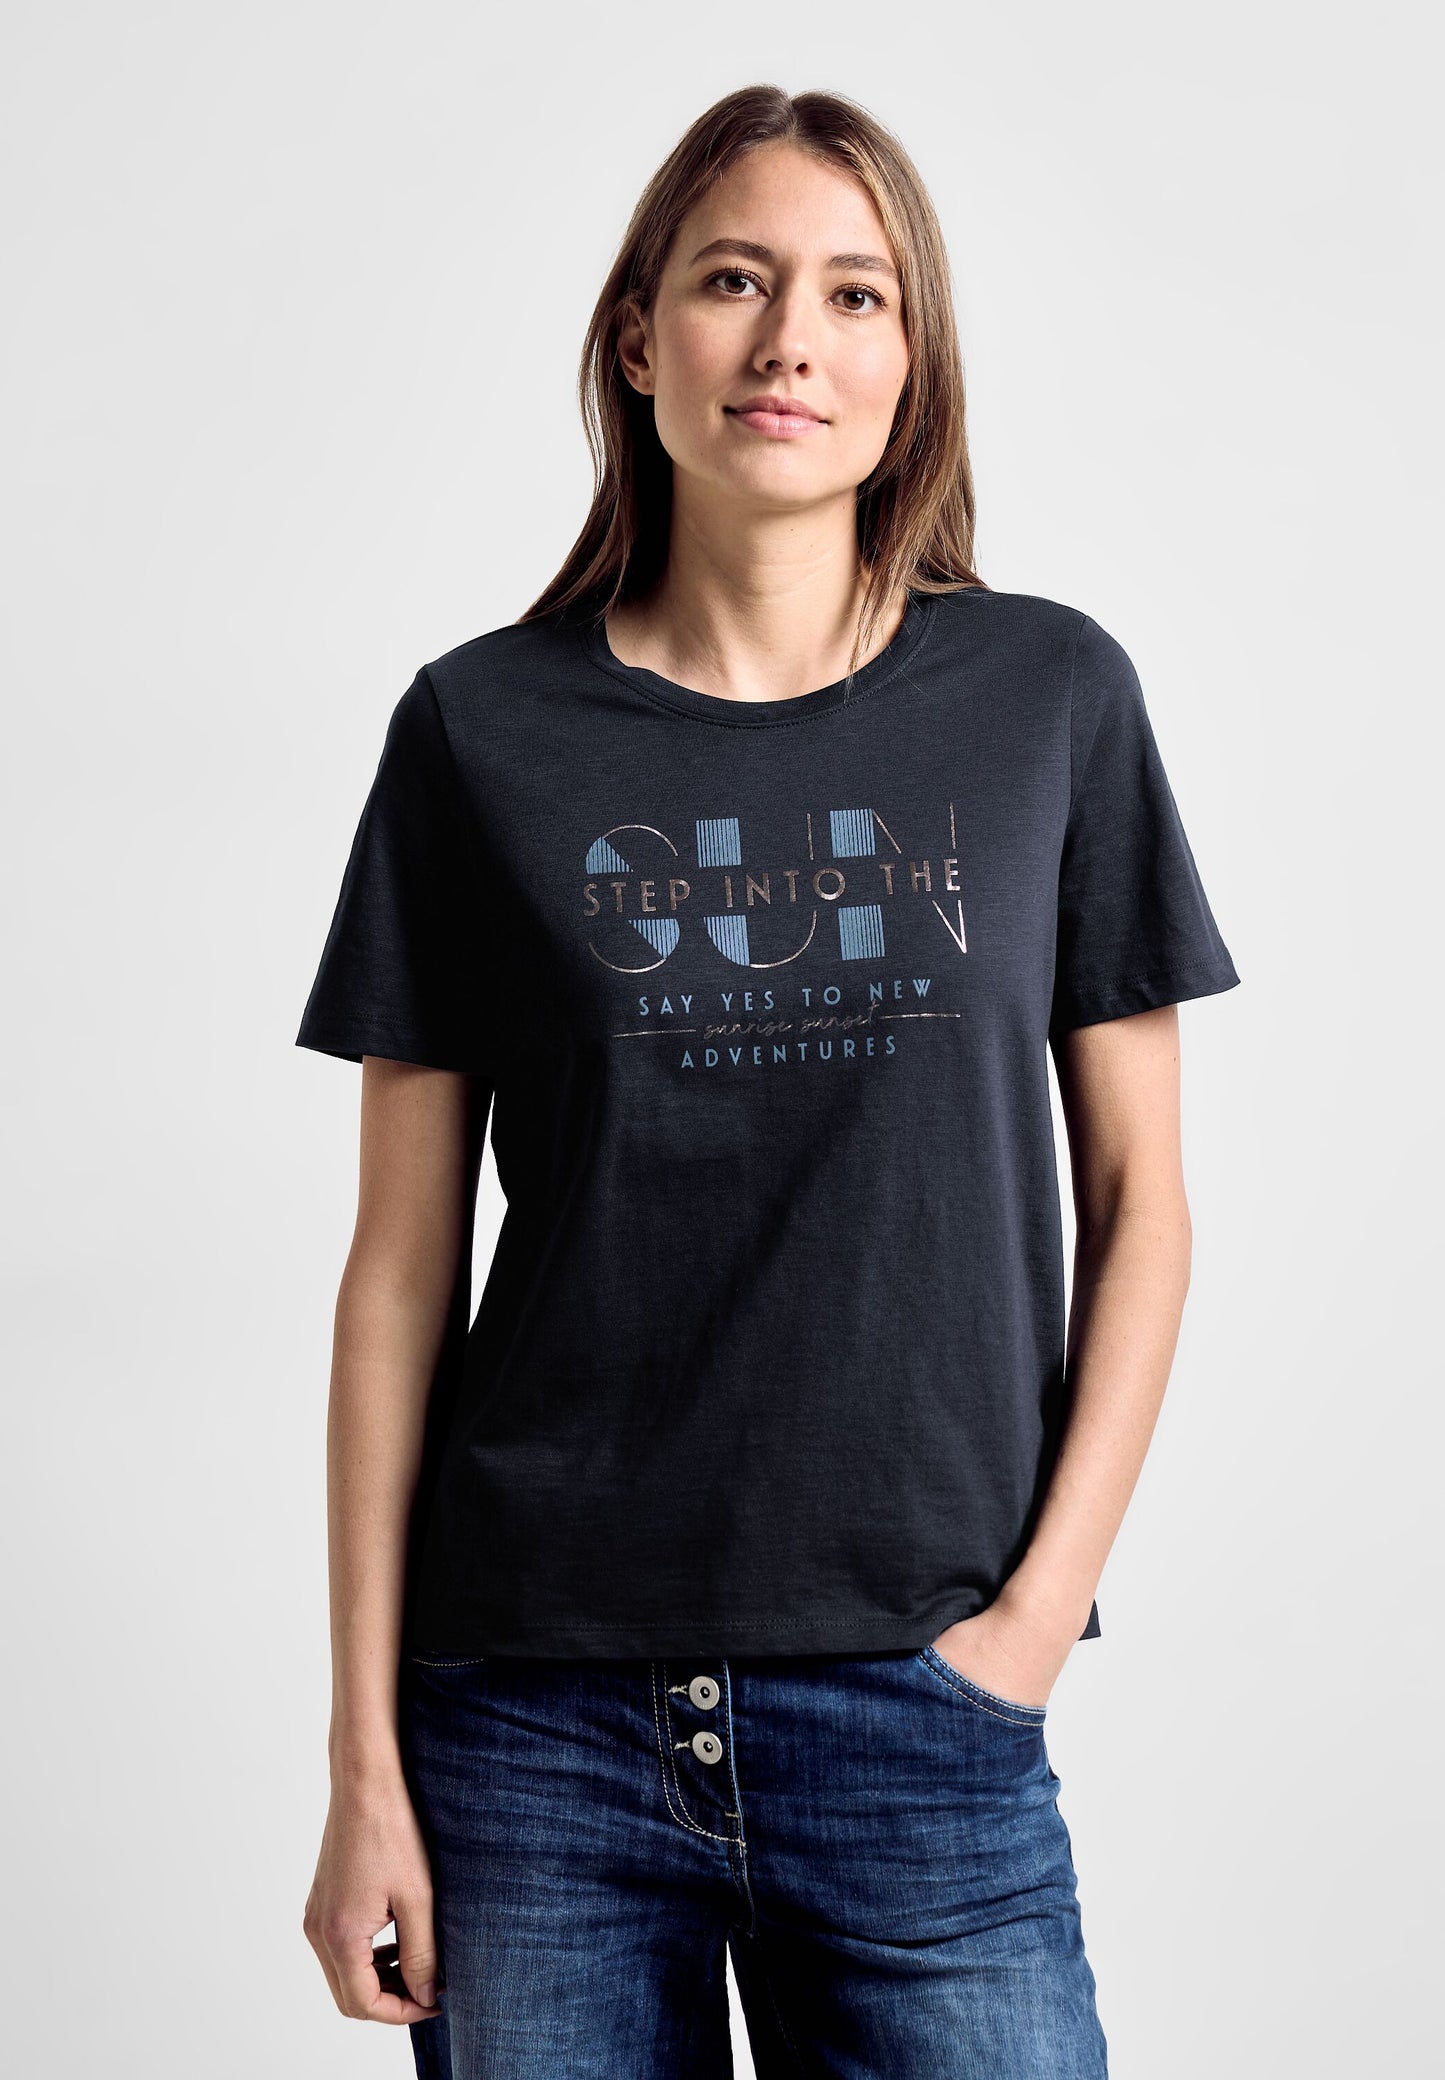 CECIL - T-Shirt mit Wording Print - blau